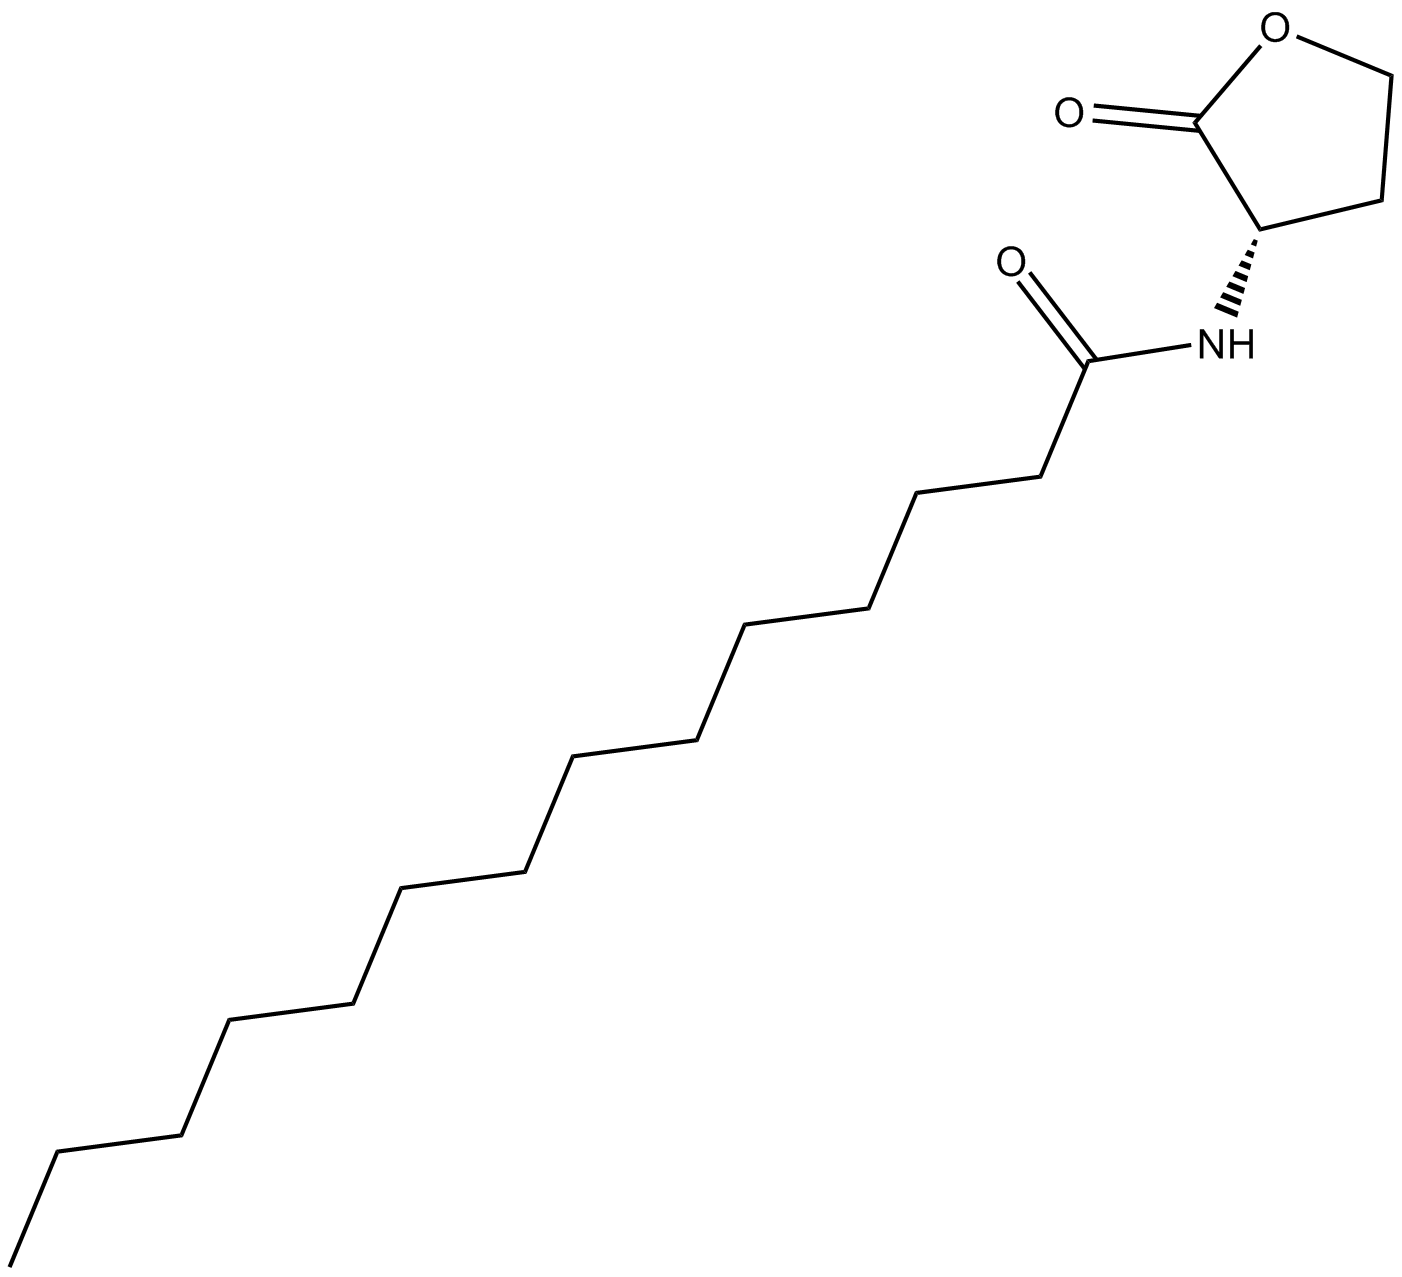 N-tetradecanoyl-L-Homoserine lactone  Chemische Struktur